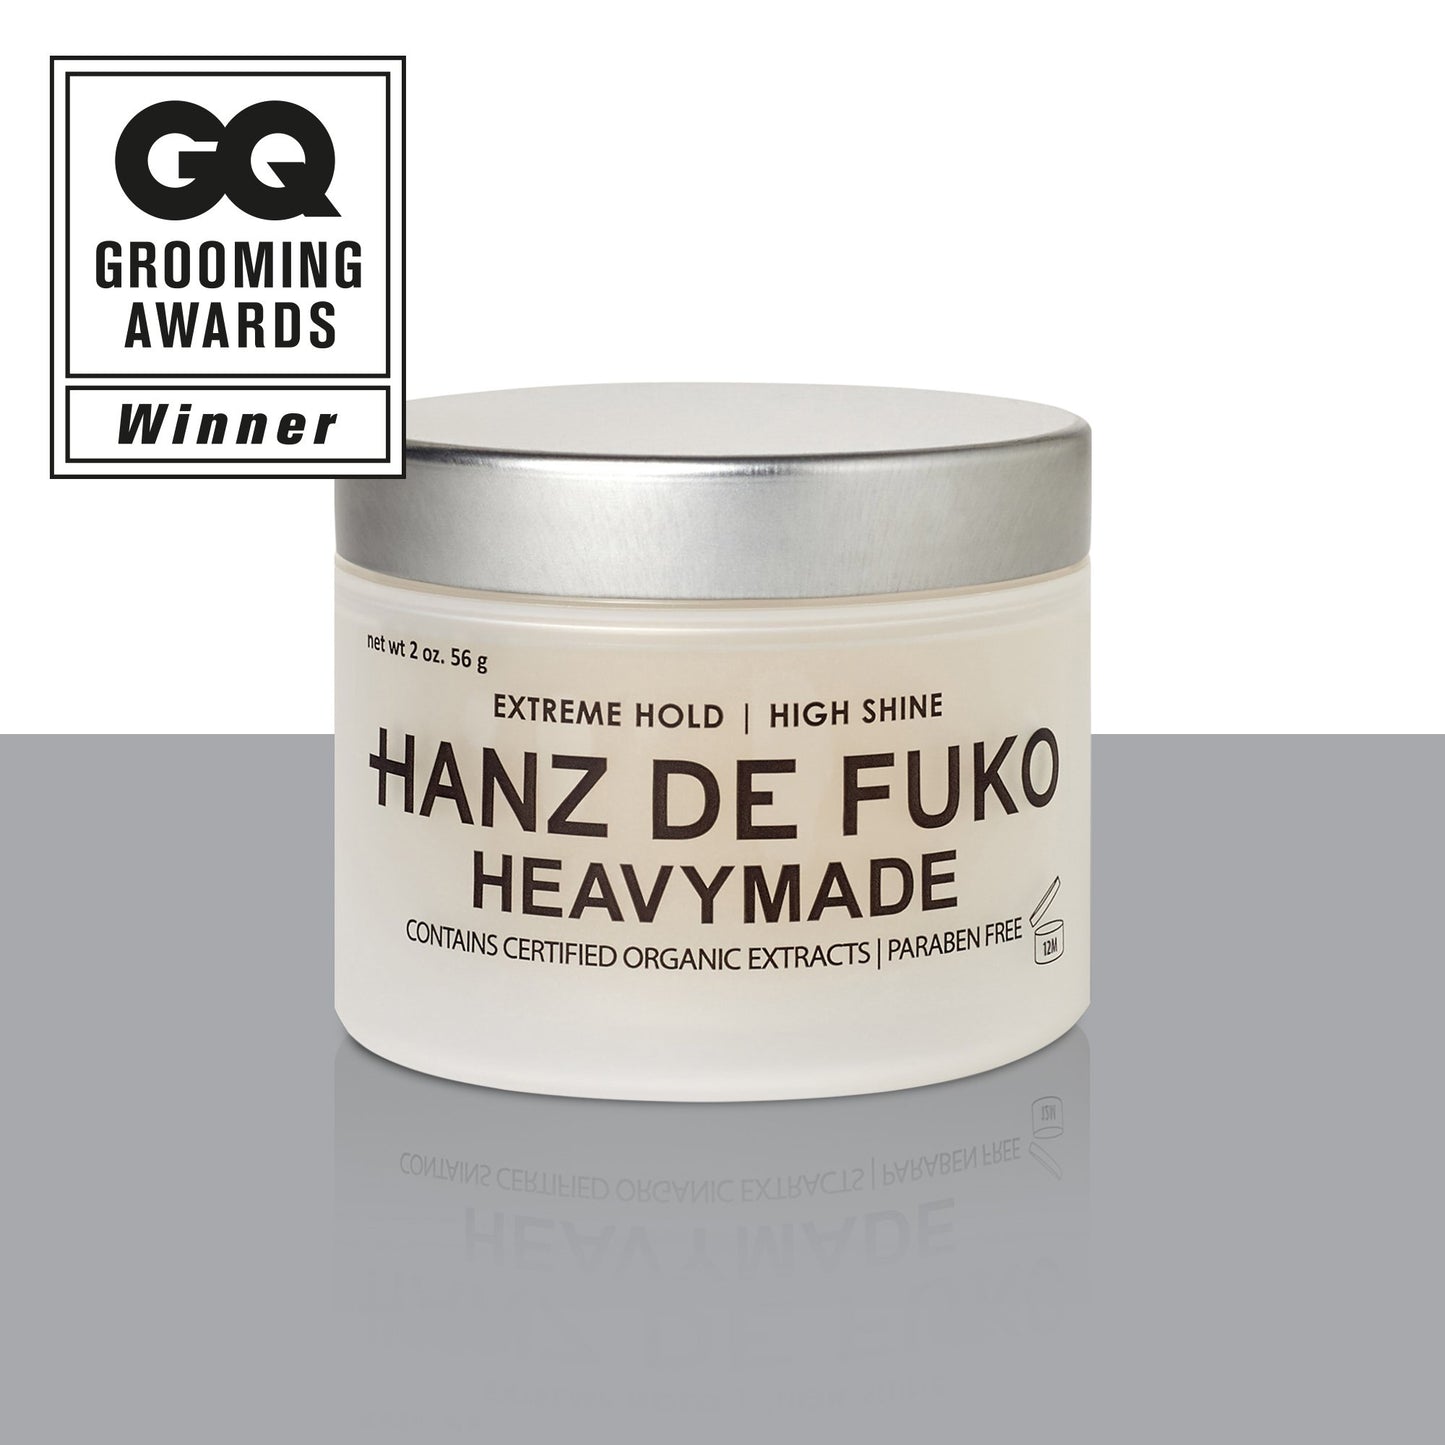 Hanz de Fuko Heavymade - Masen Products (Pty) LTD